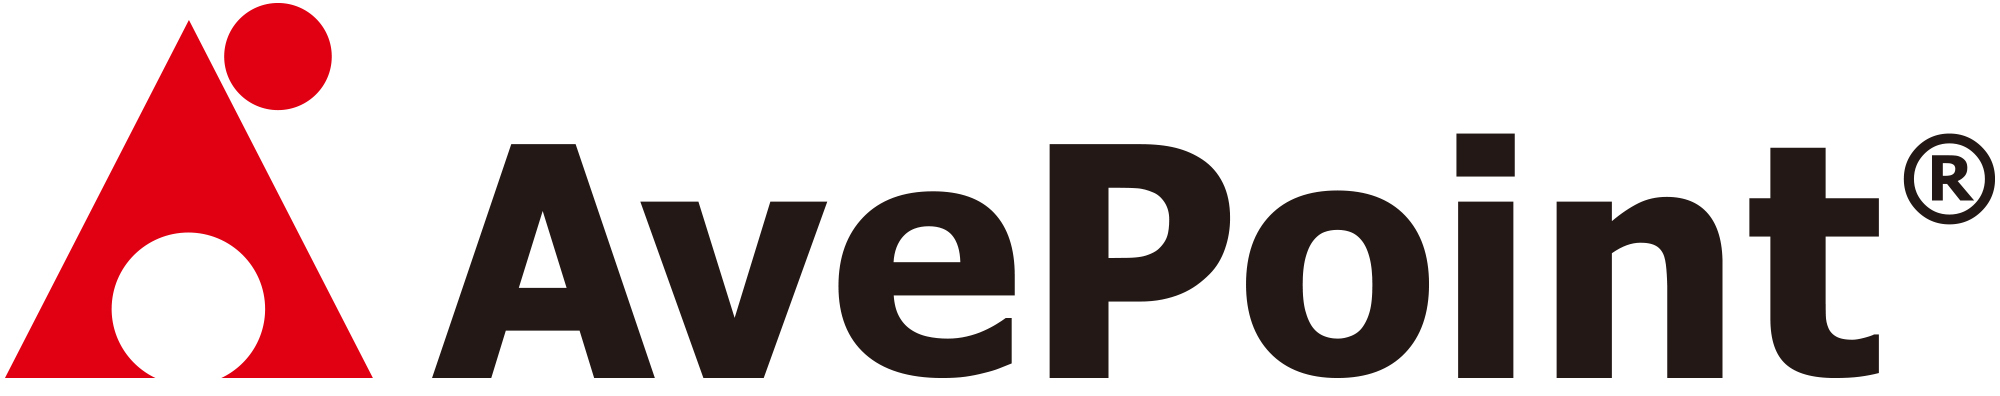 AvePoint_logo